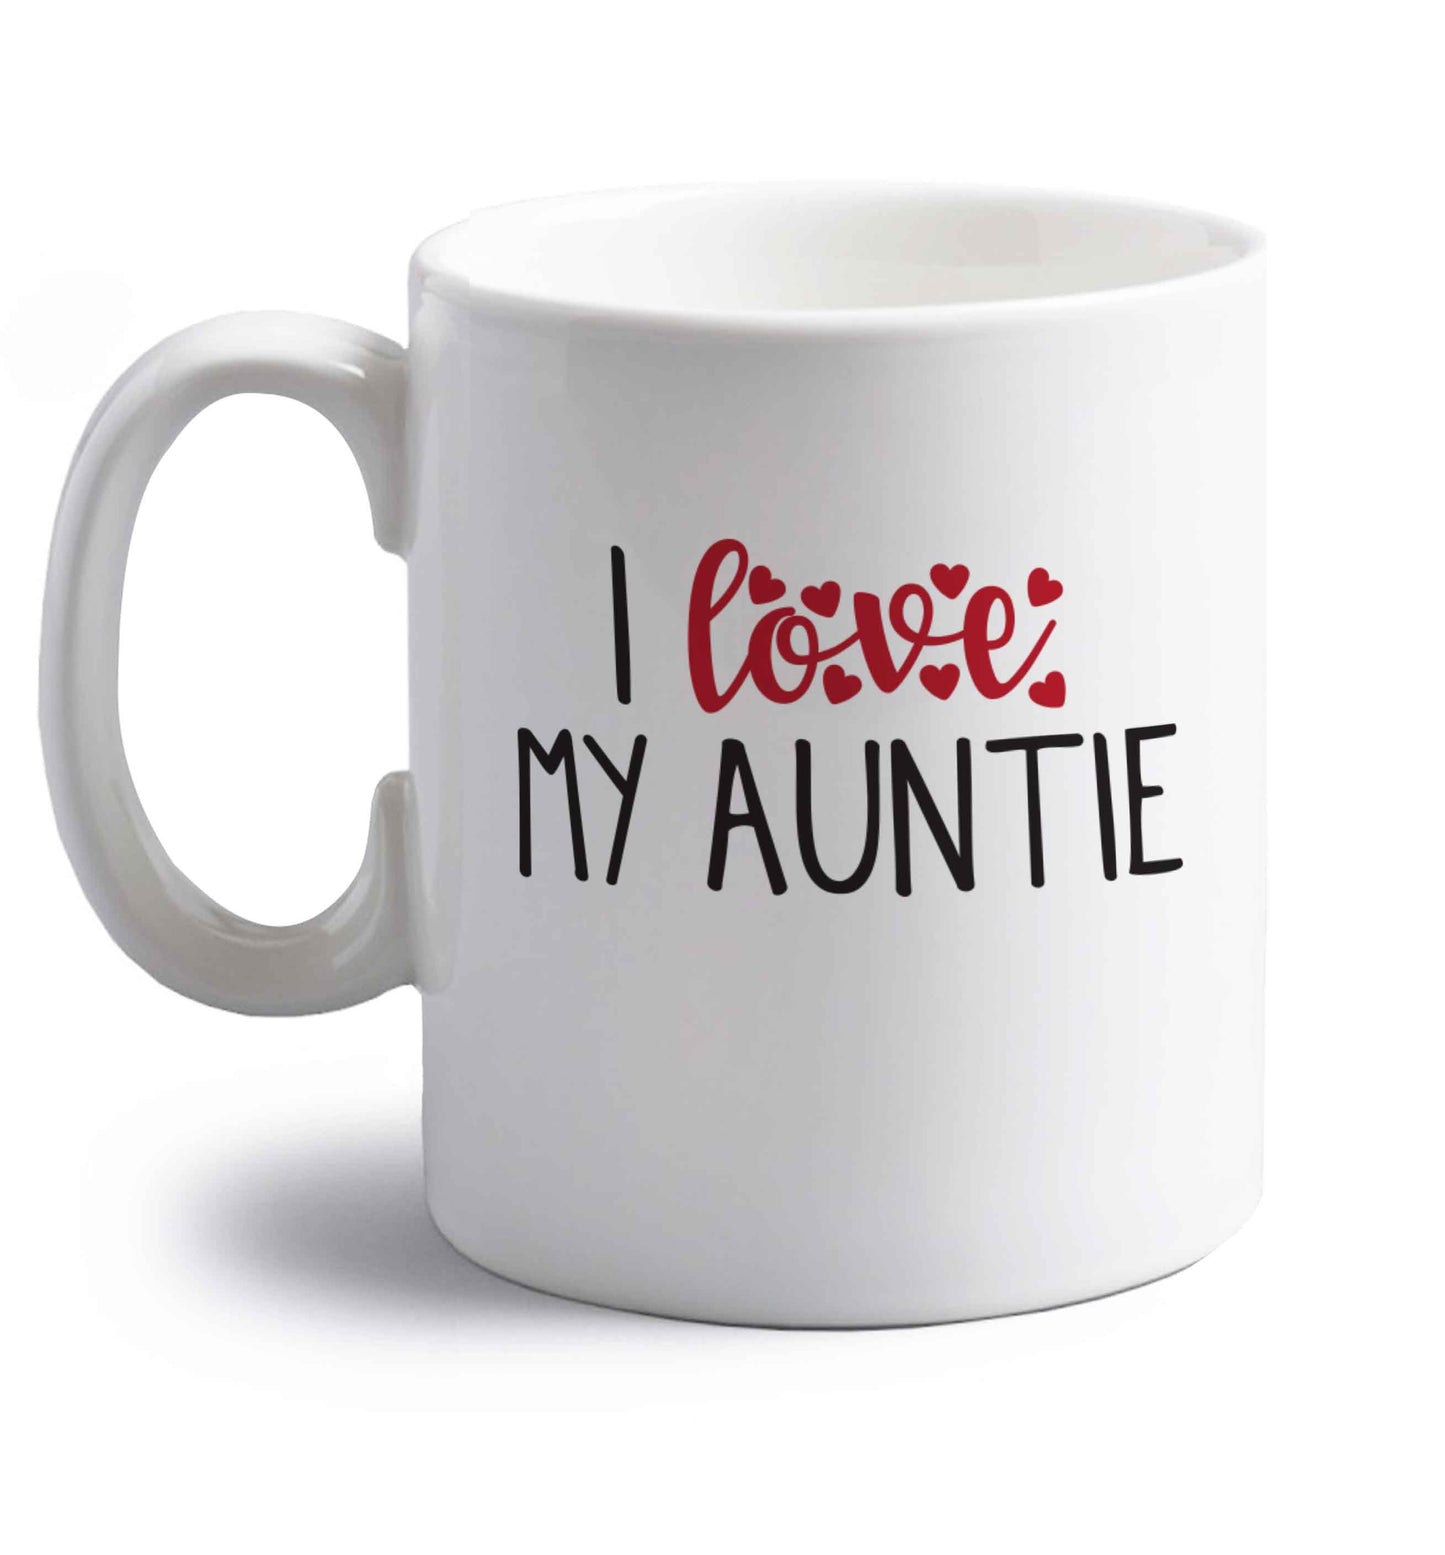 I love my auntie right handed white ceramic mug 